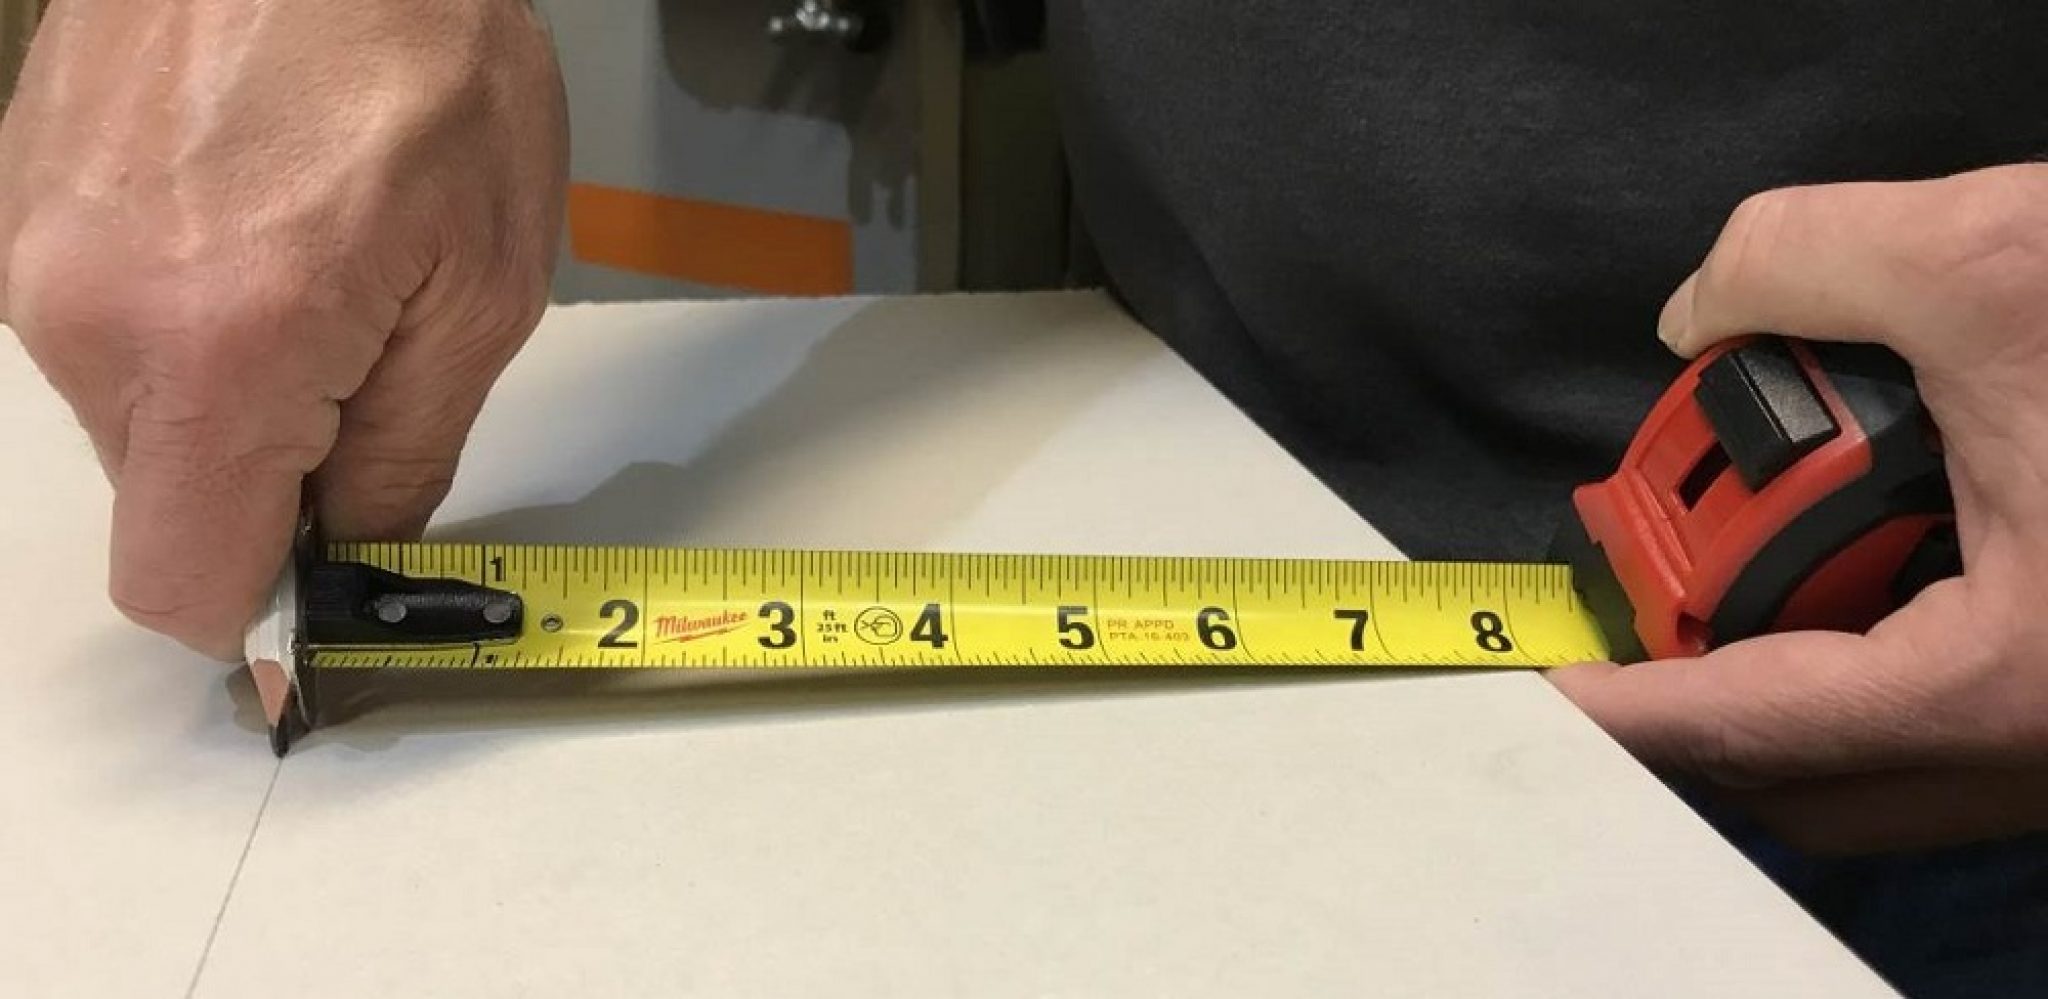 1 метр ру. Метр строительный. Measure предмет. Measuring Tape 15 m with Wipers. Tape measure 8meter.